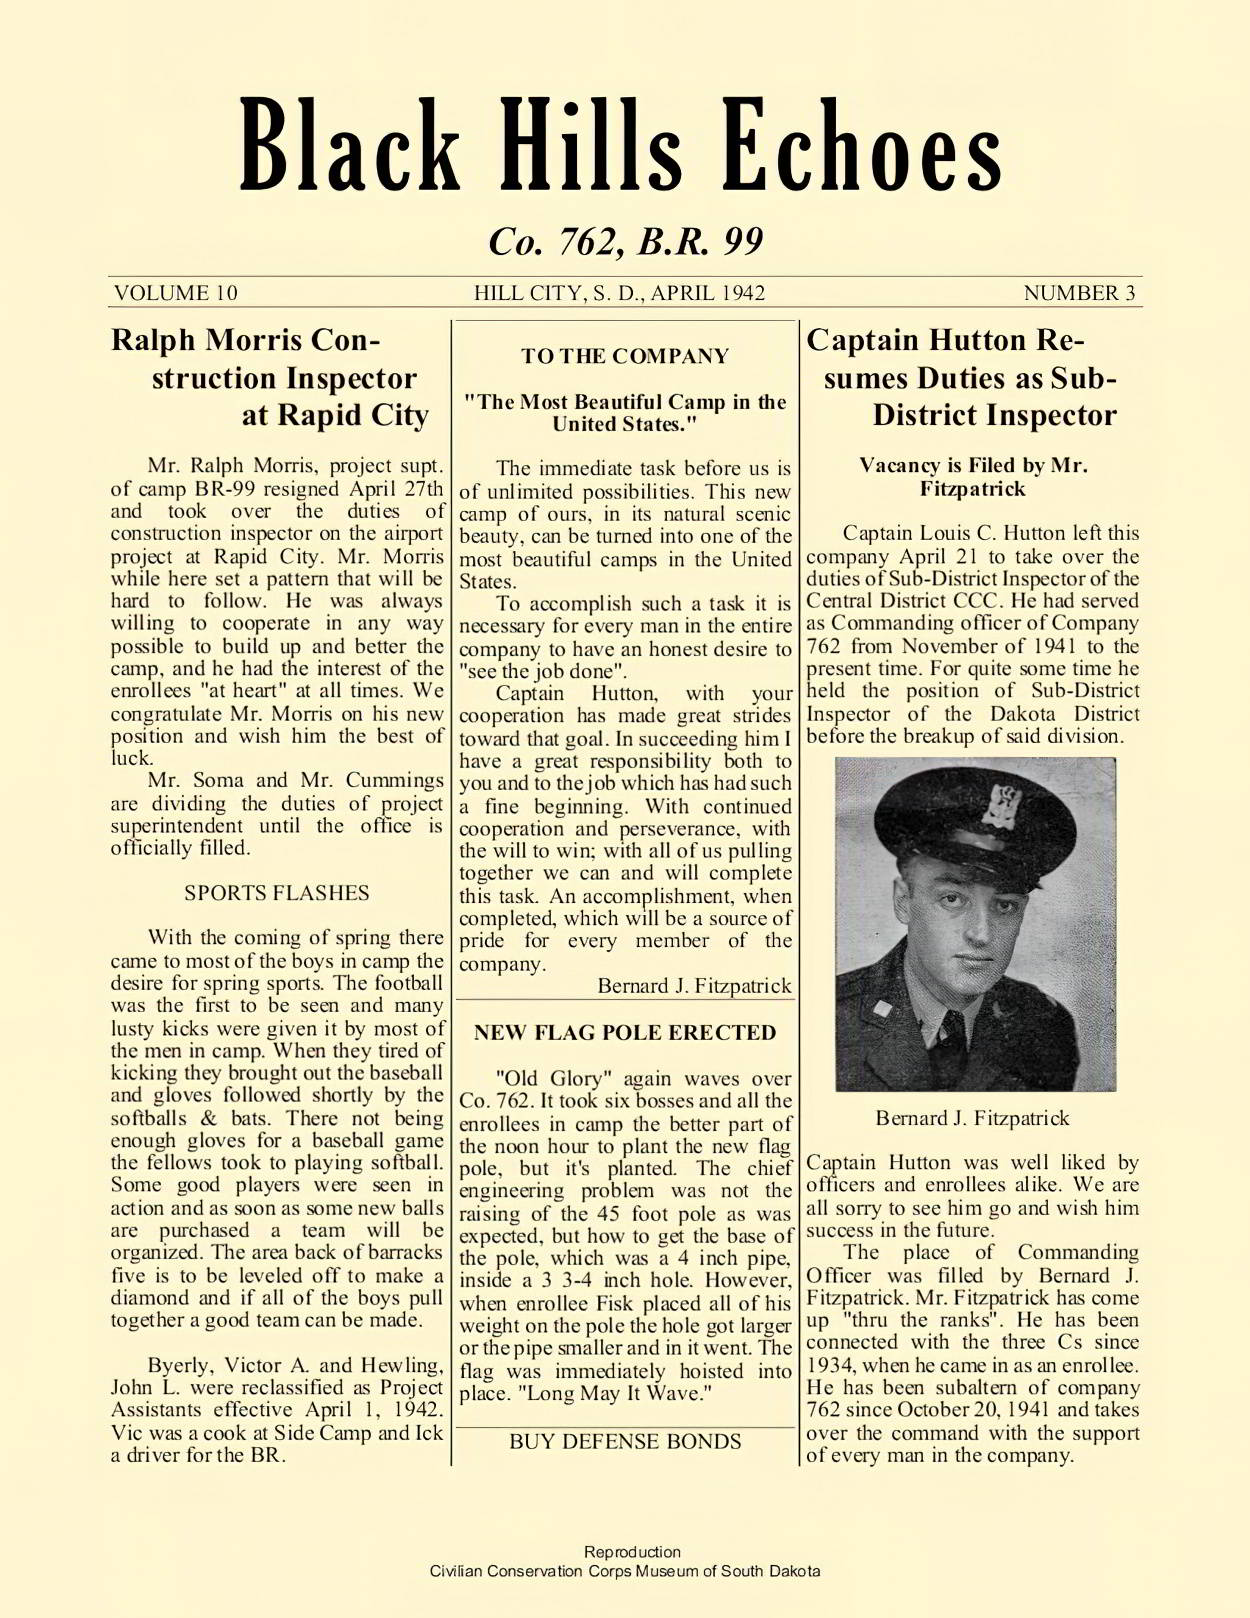 Black Hills Echoes April 1942